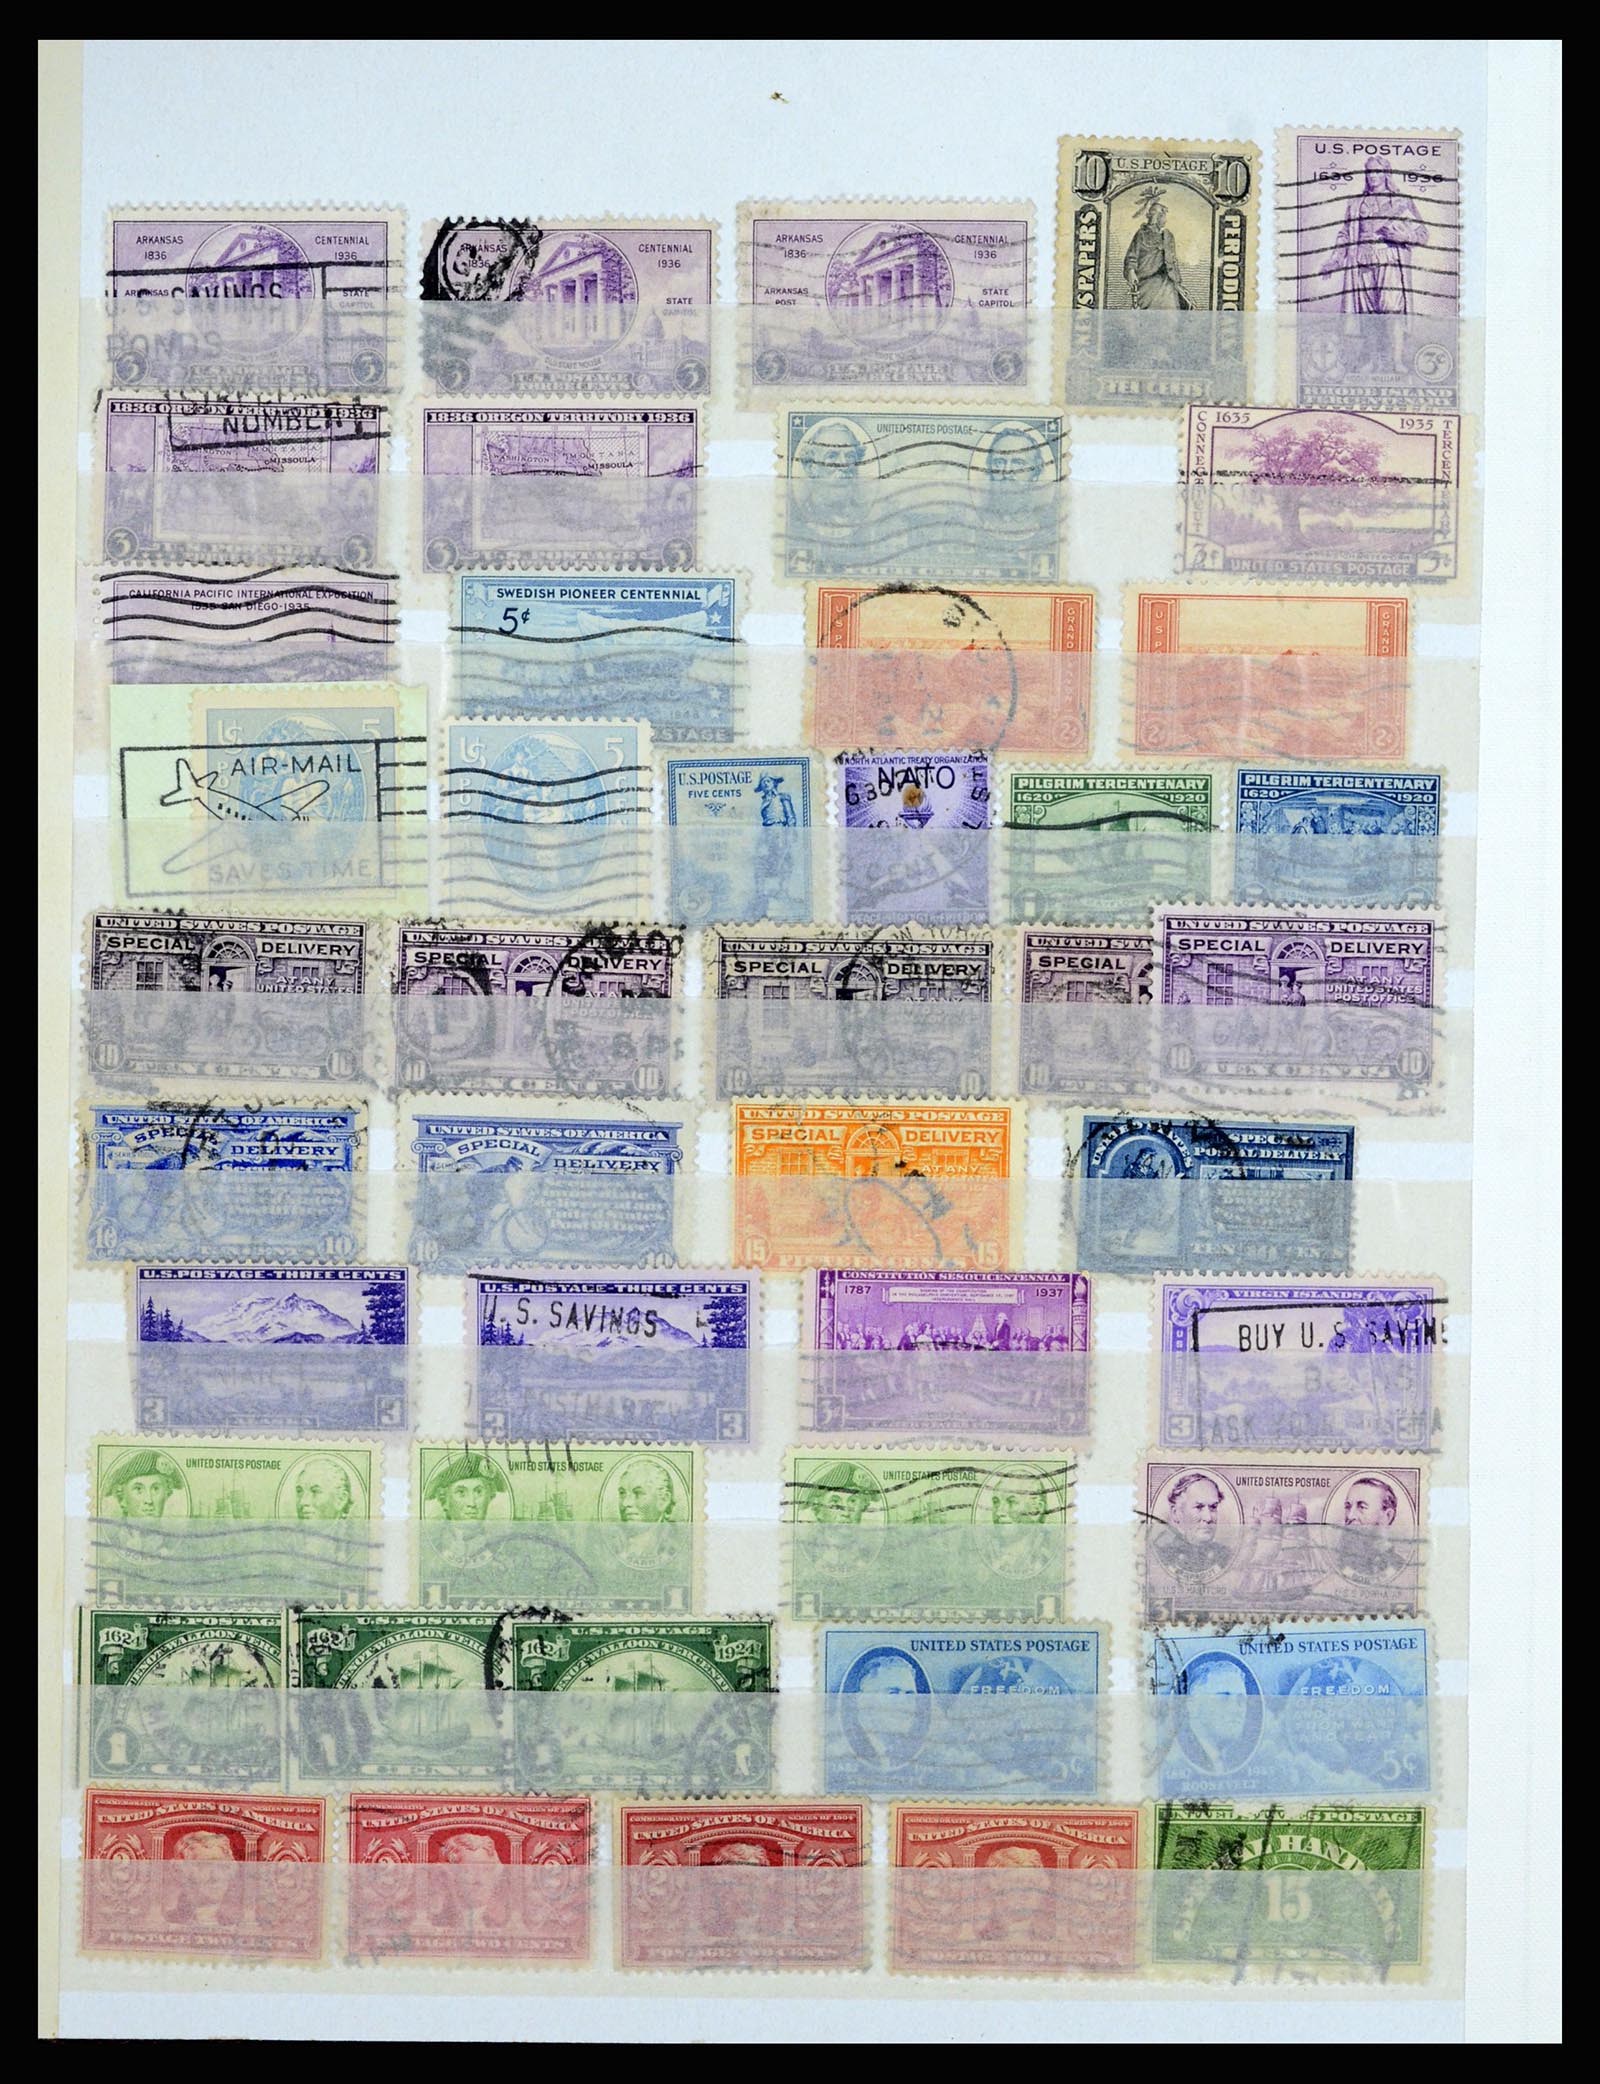 36866 090 - Stamp collection 36866 USA sorting lot.